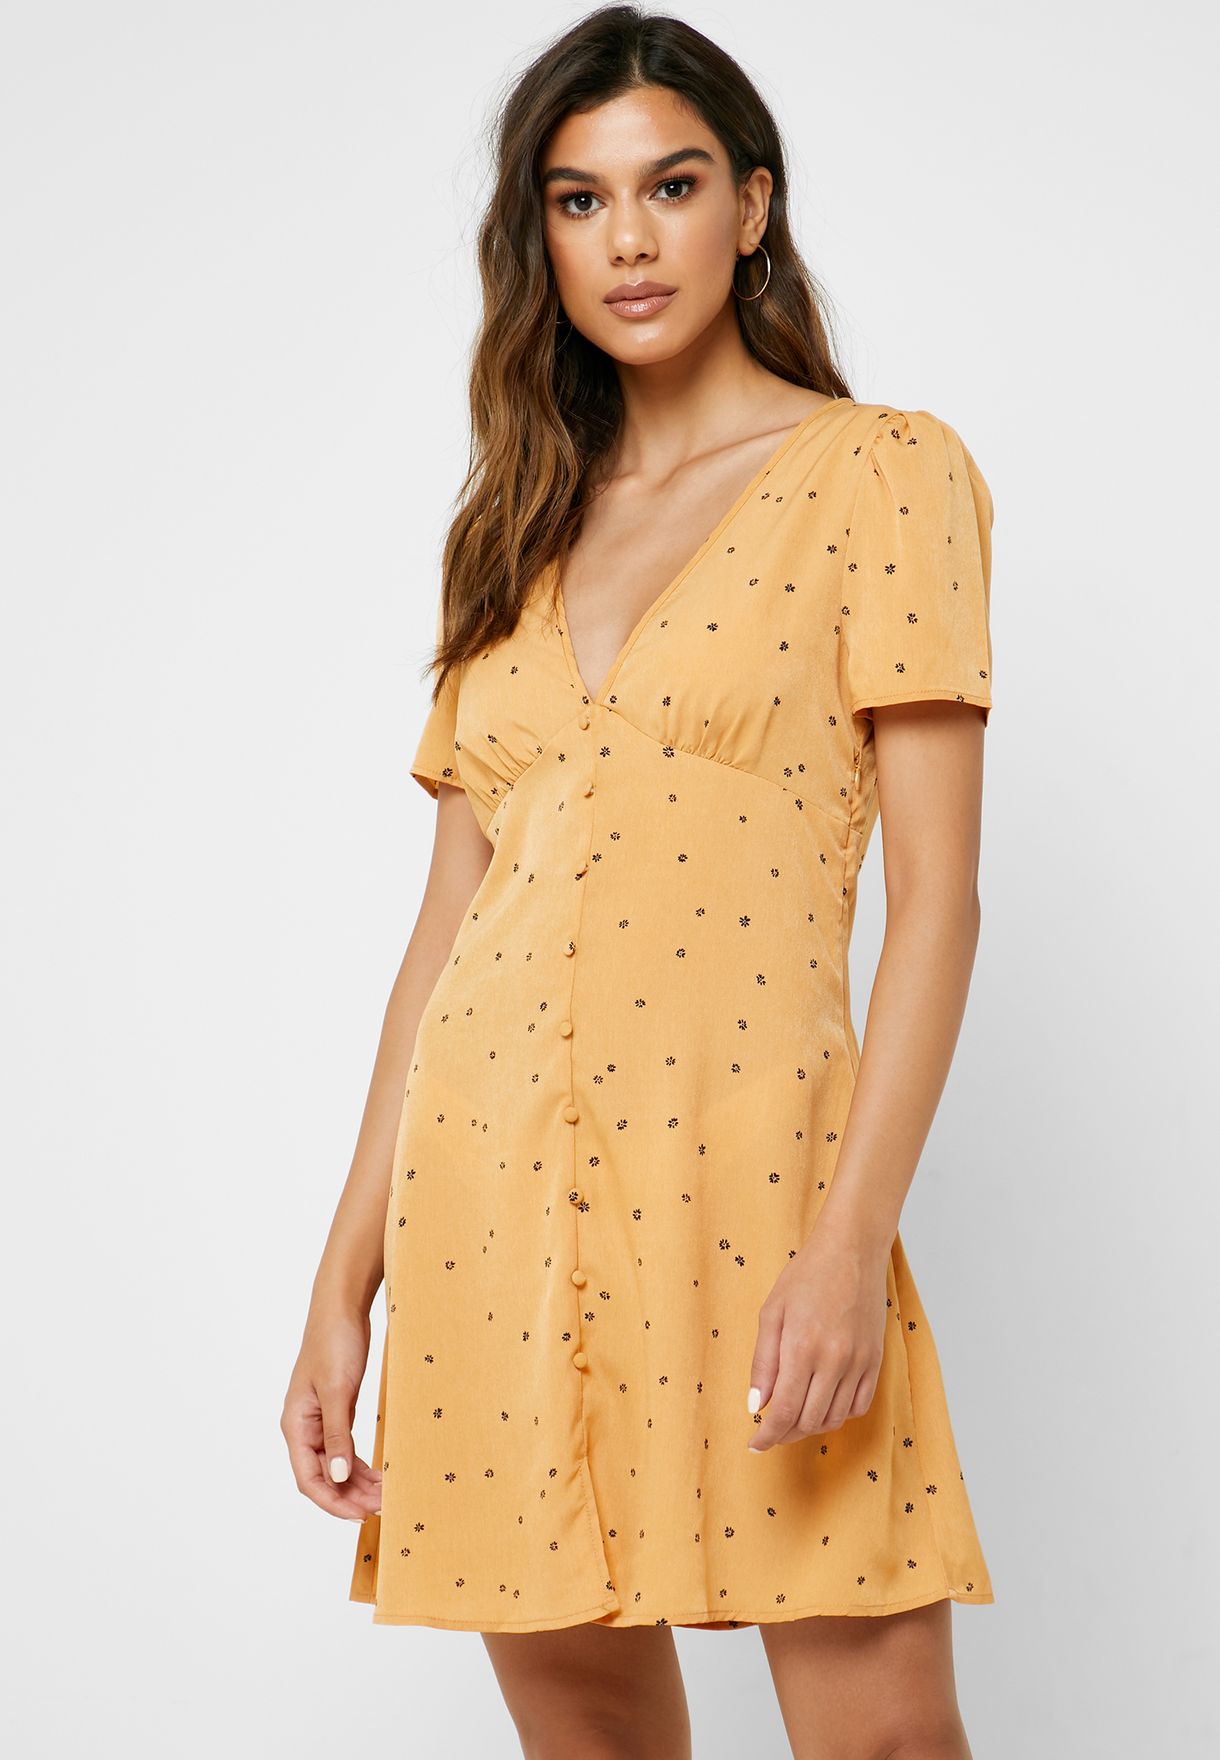 cotton on polka dot dress